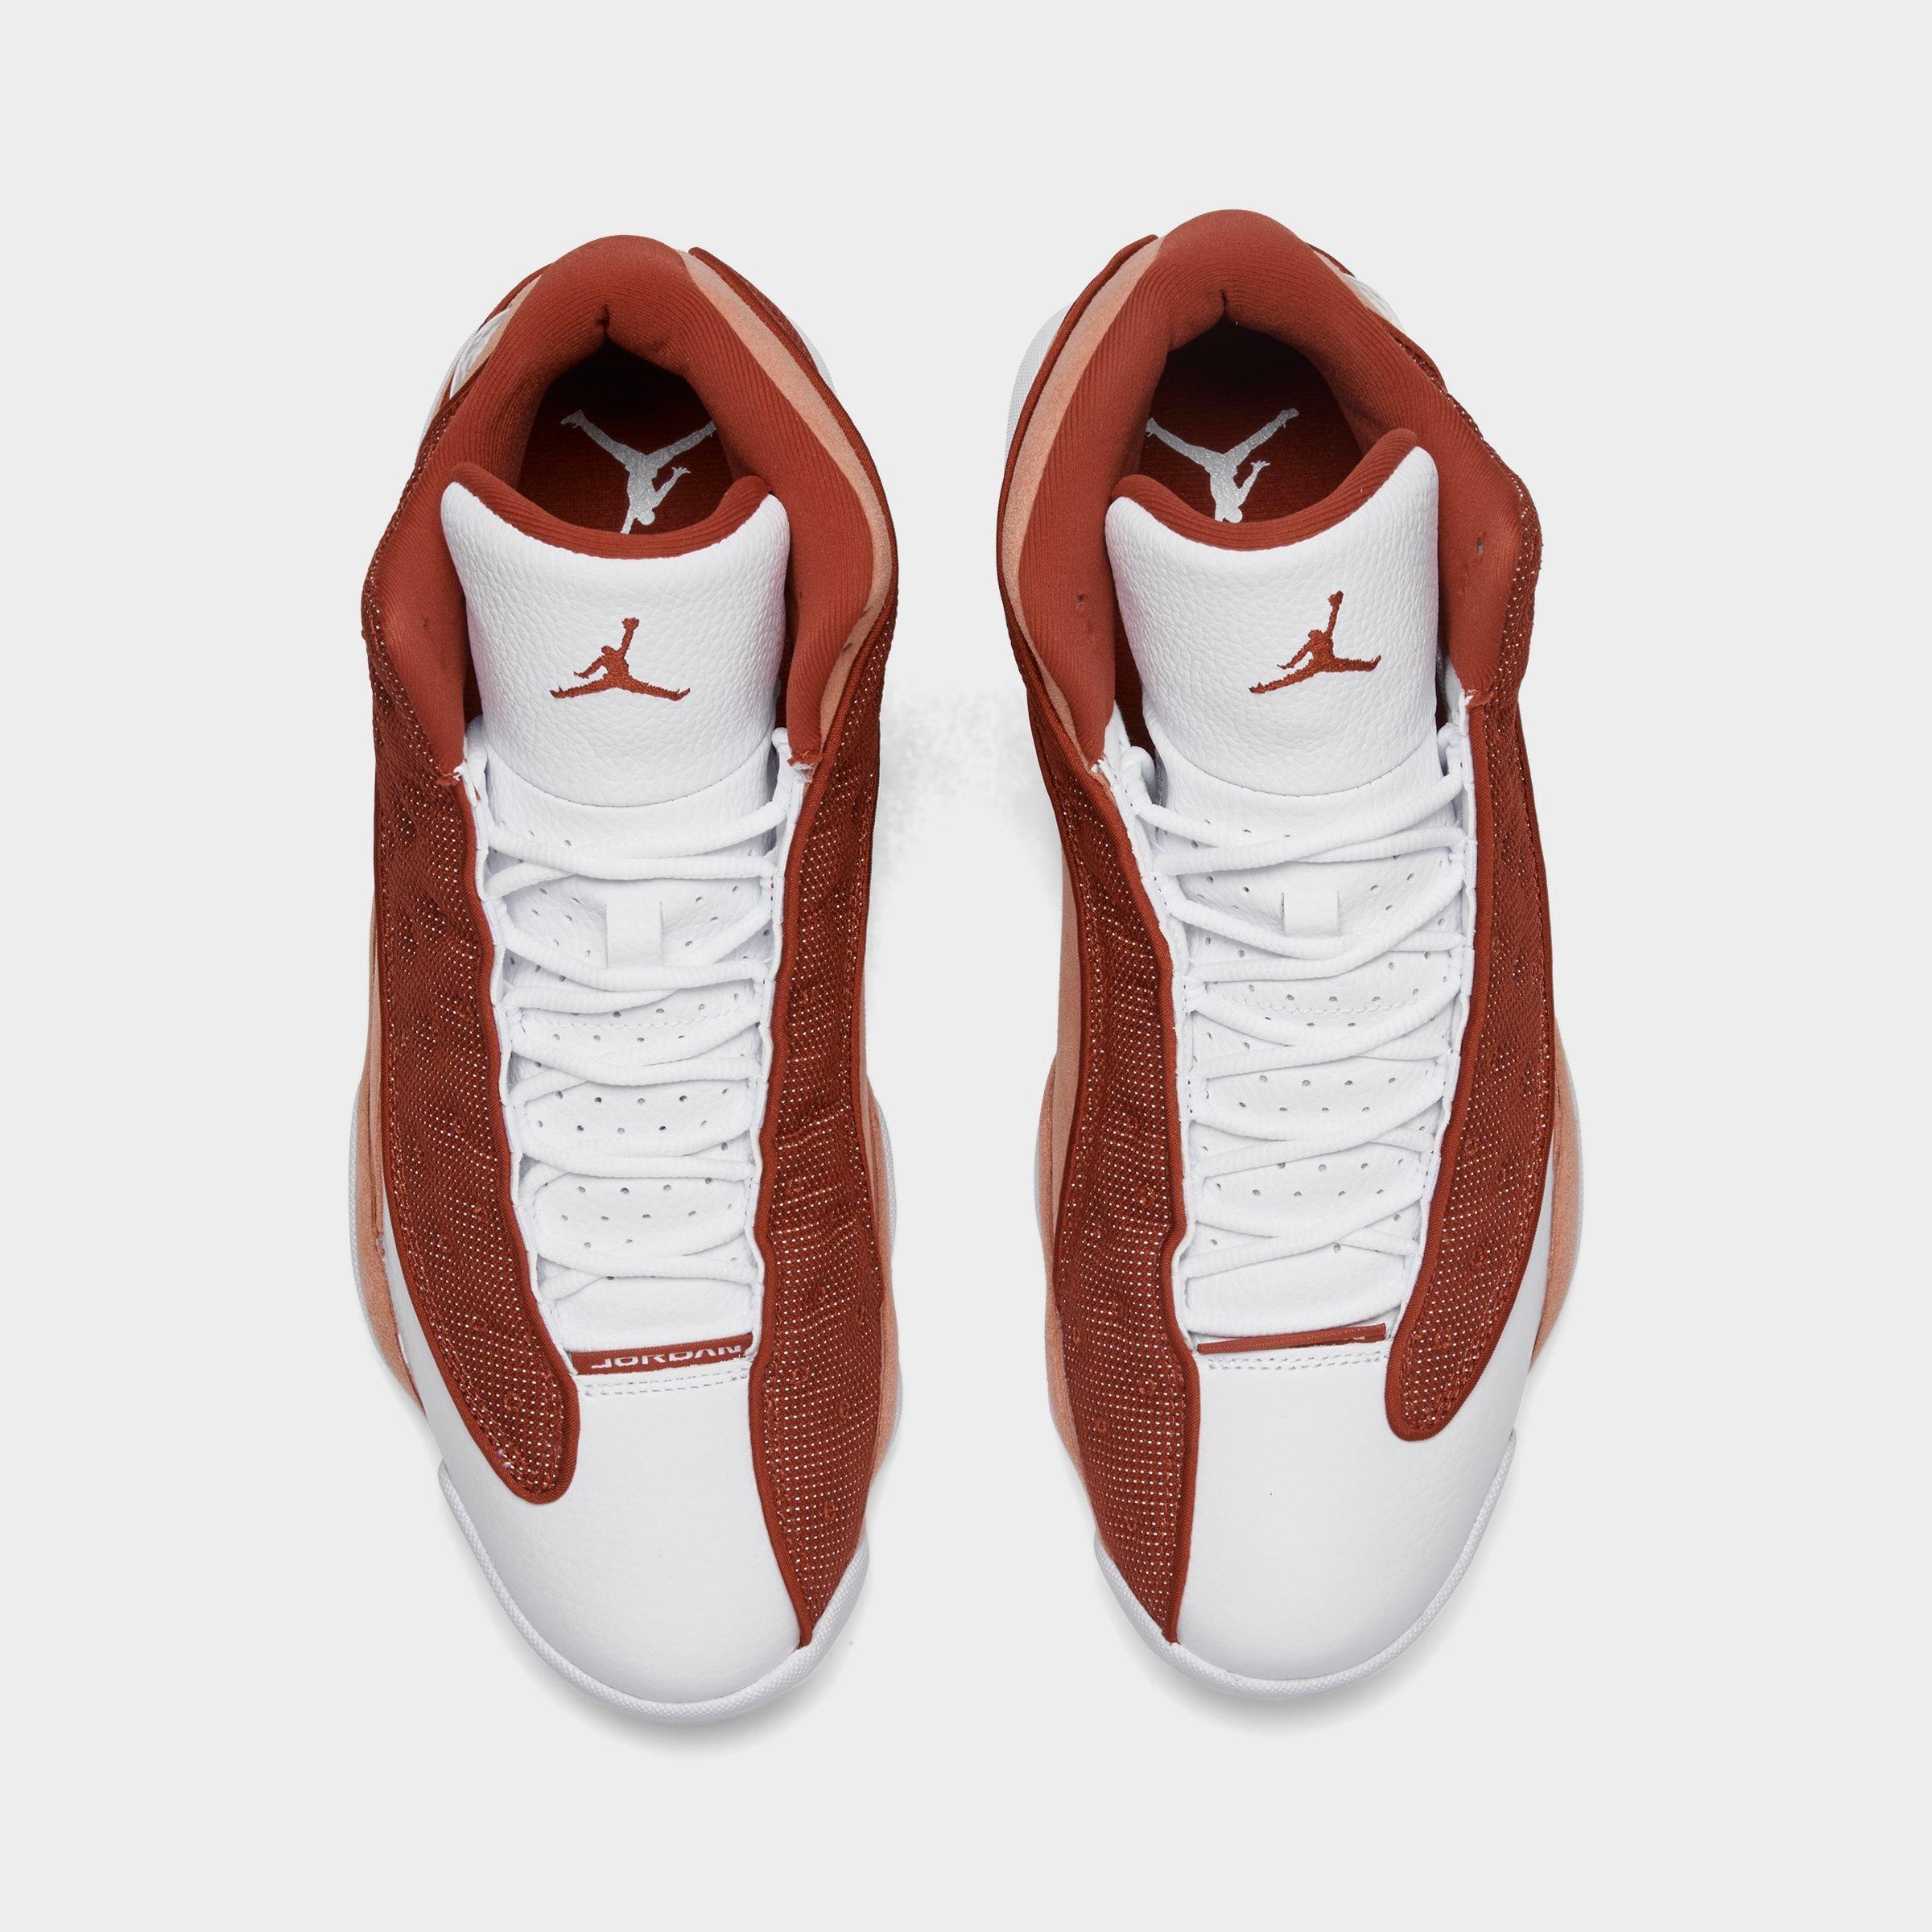 Air Jordan Retro 13 Basketball Shoes| JD Sports